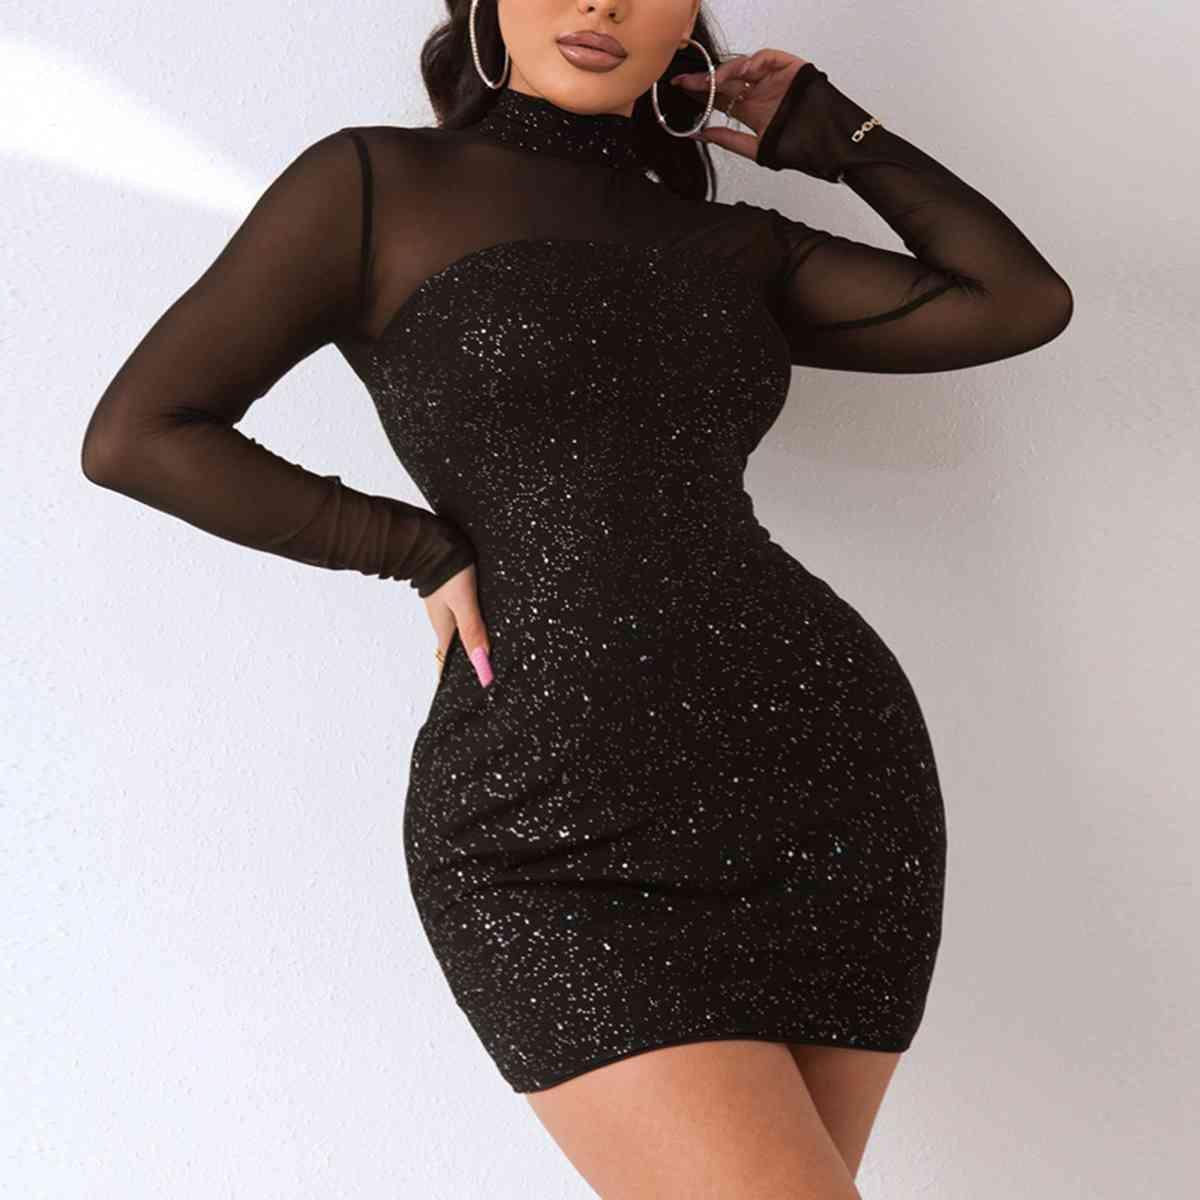 a woman posing in a black dress